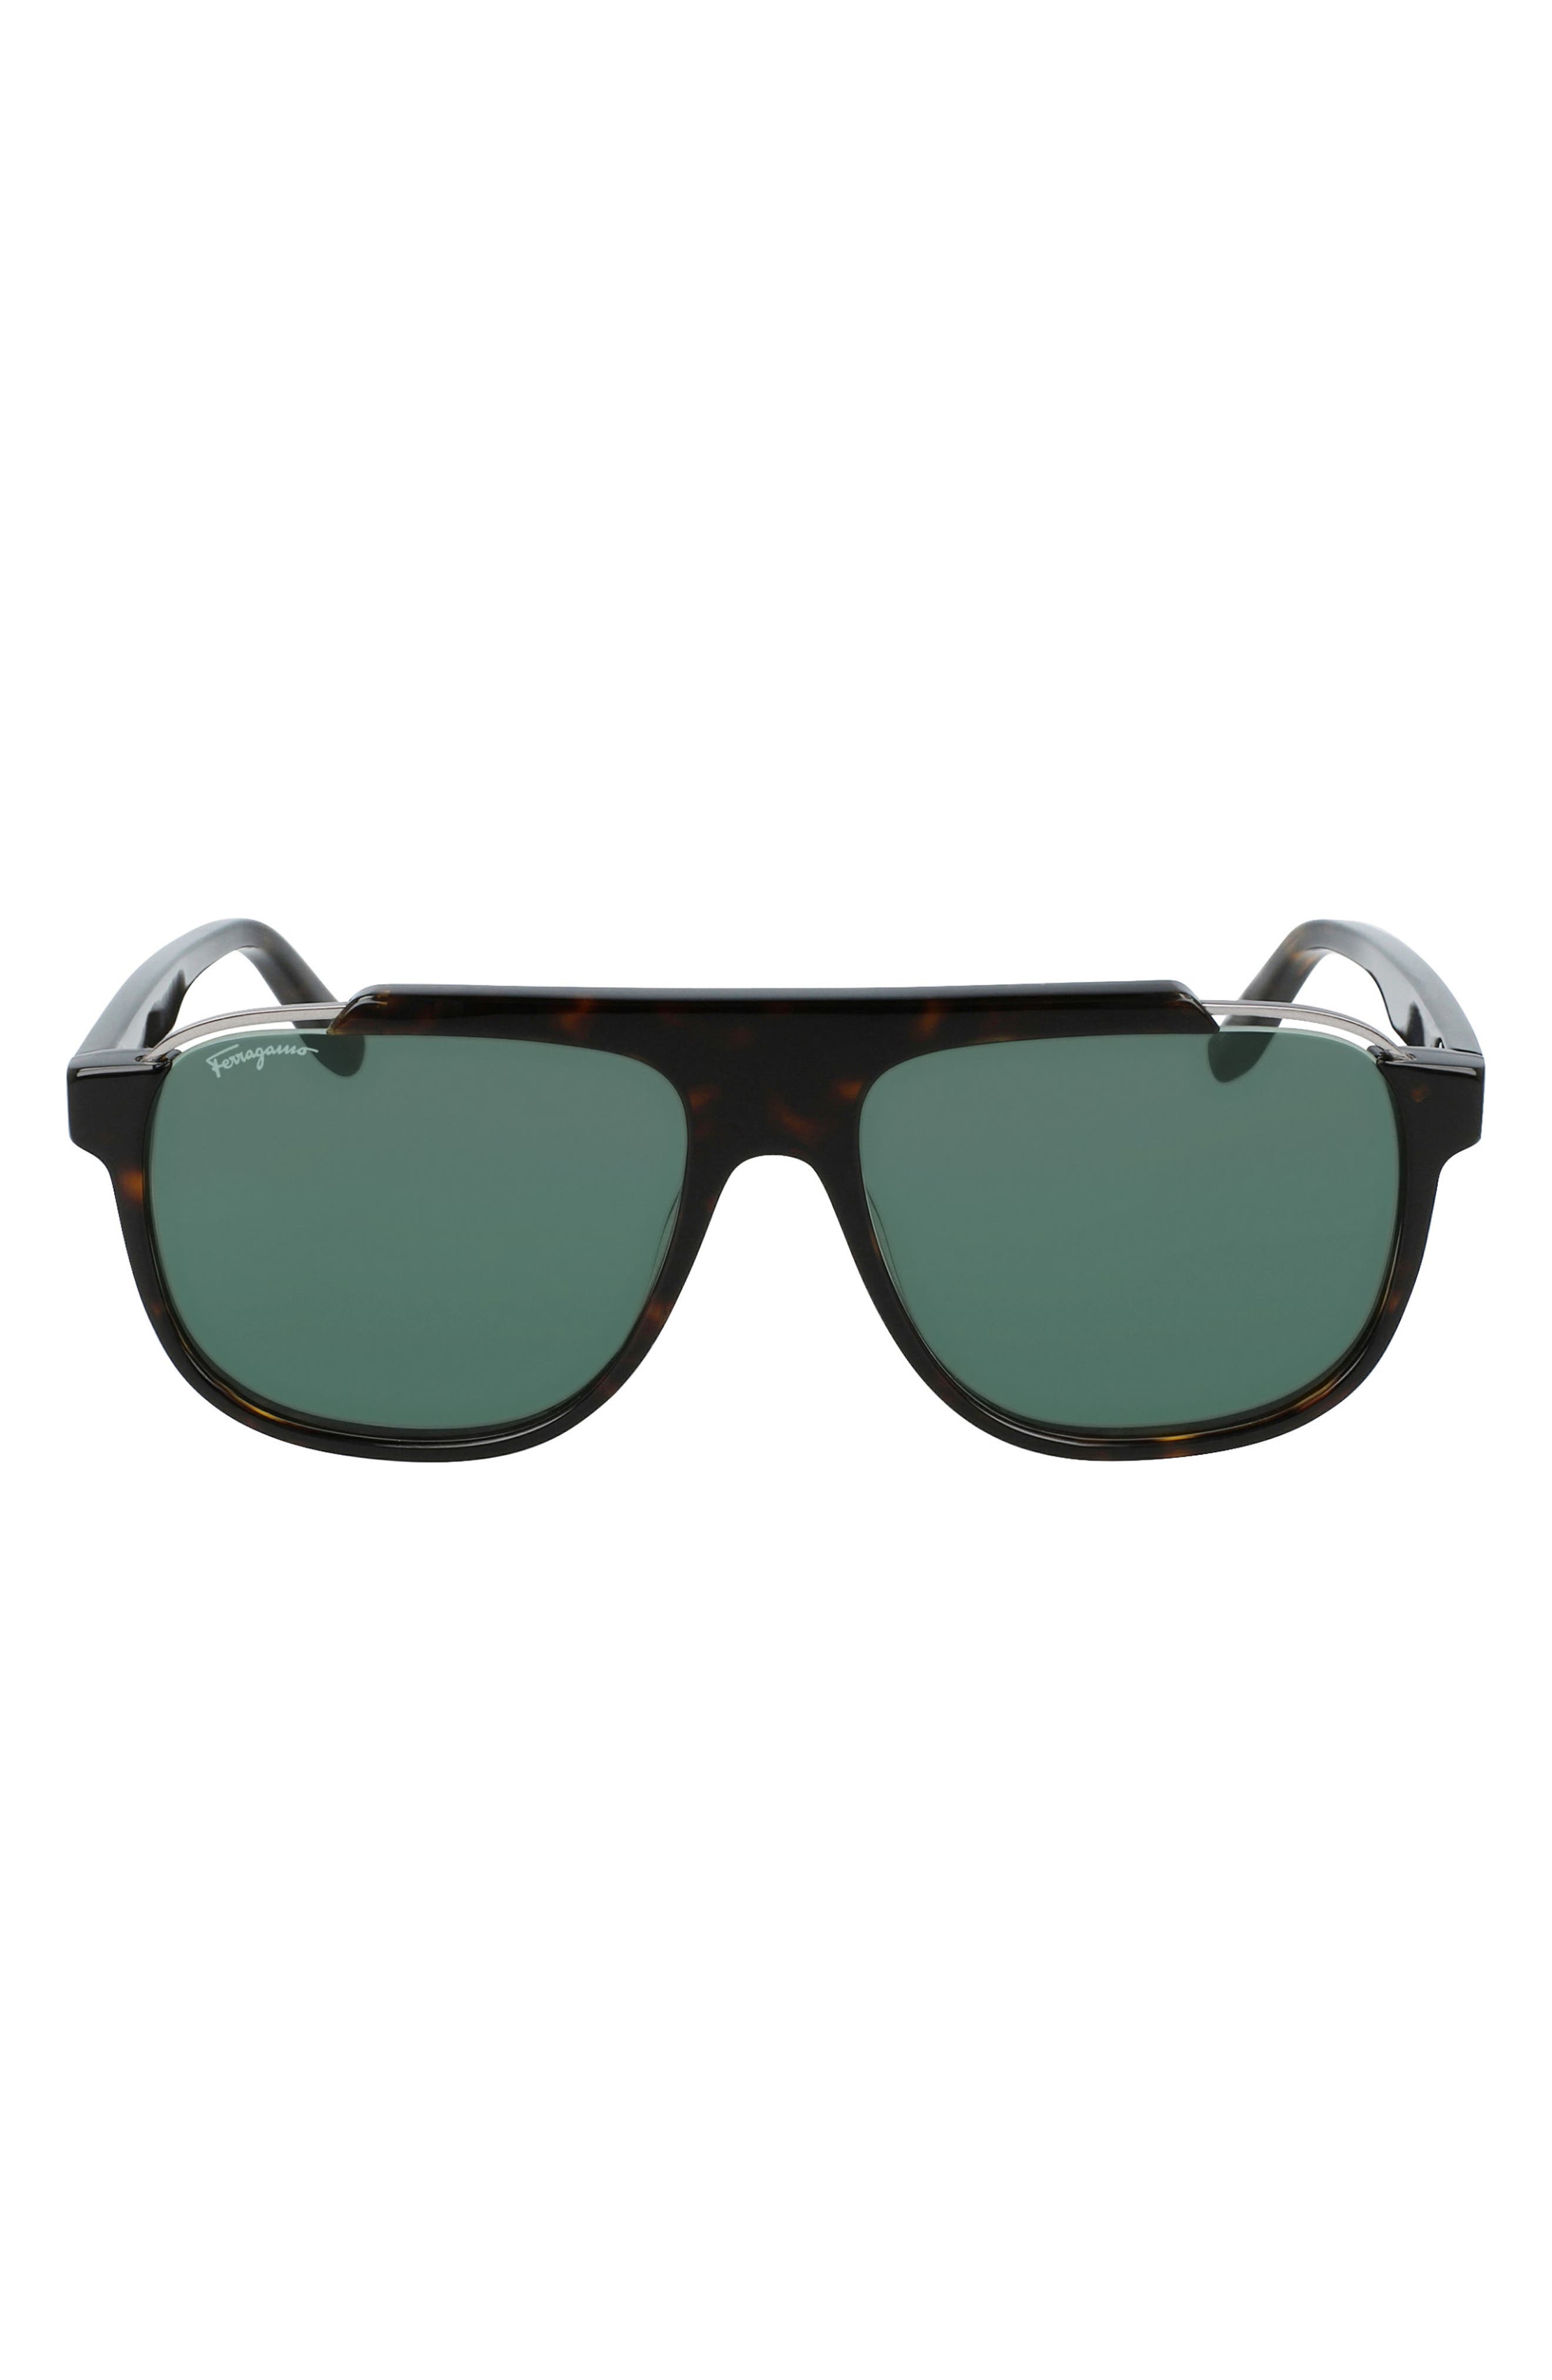 Salvatore Ferragamo 58mm Rectangle Sunglasses in Dark Tortoise/Green at Nordstrom